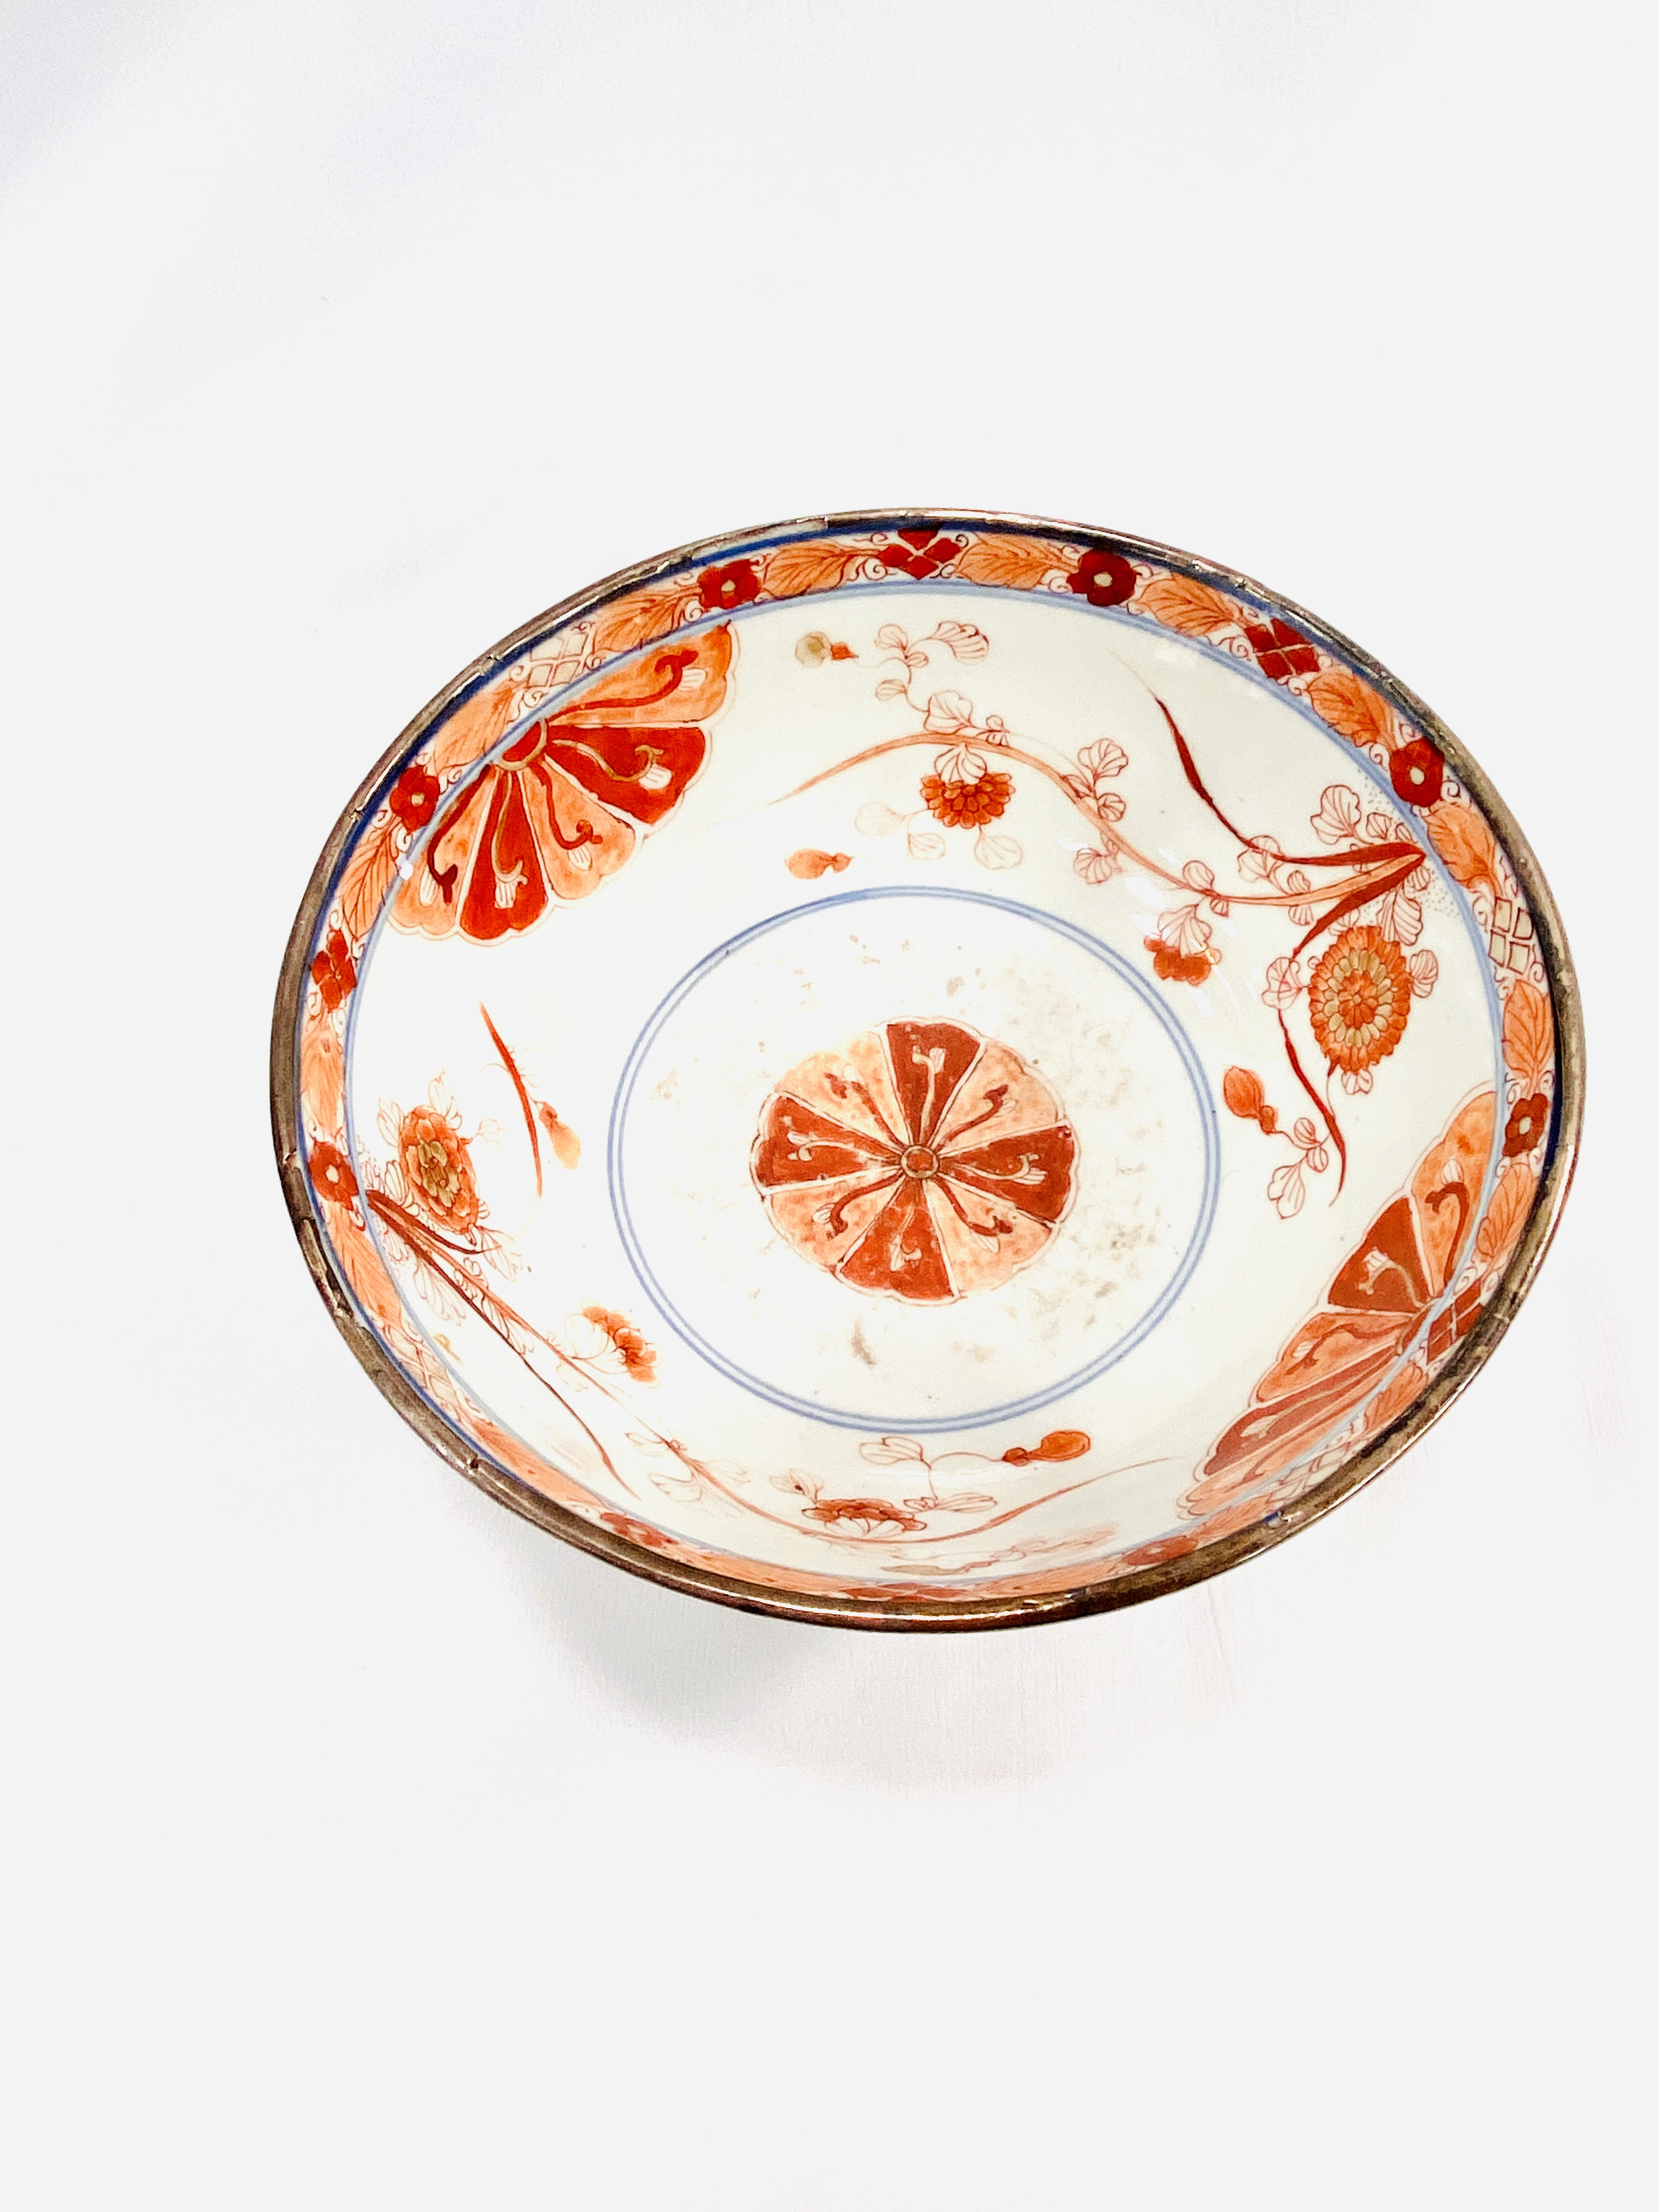 Oriental bowl and ginger jar - Image 2 of 17